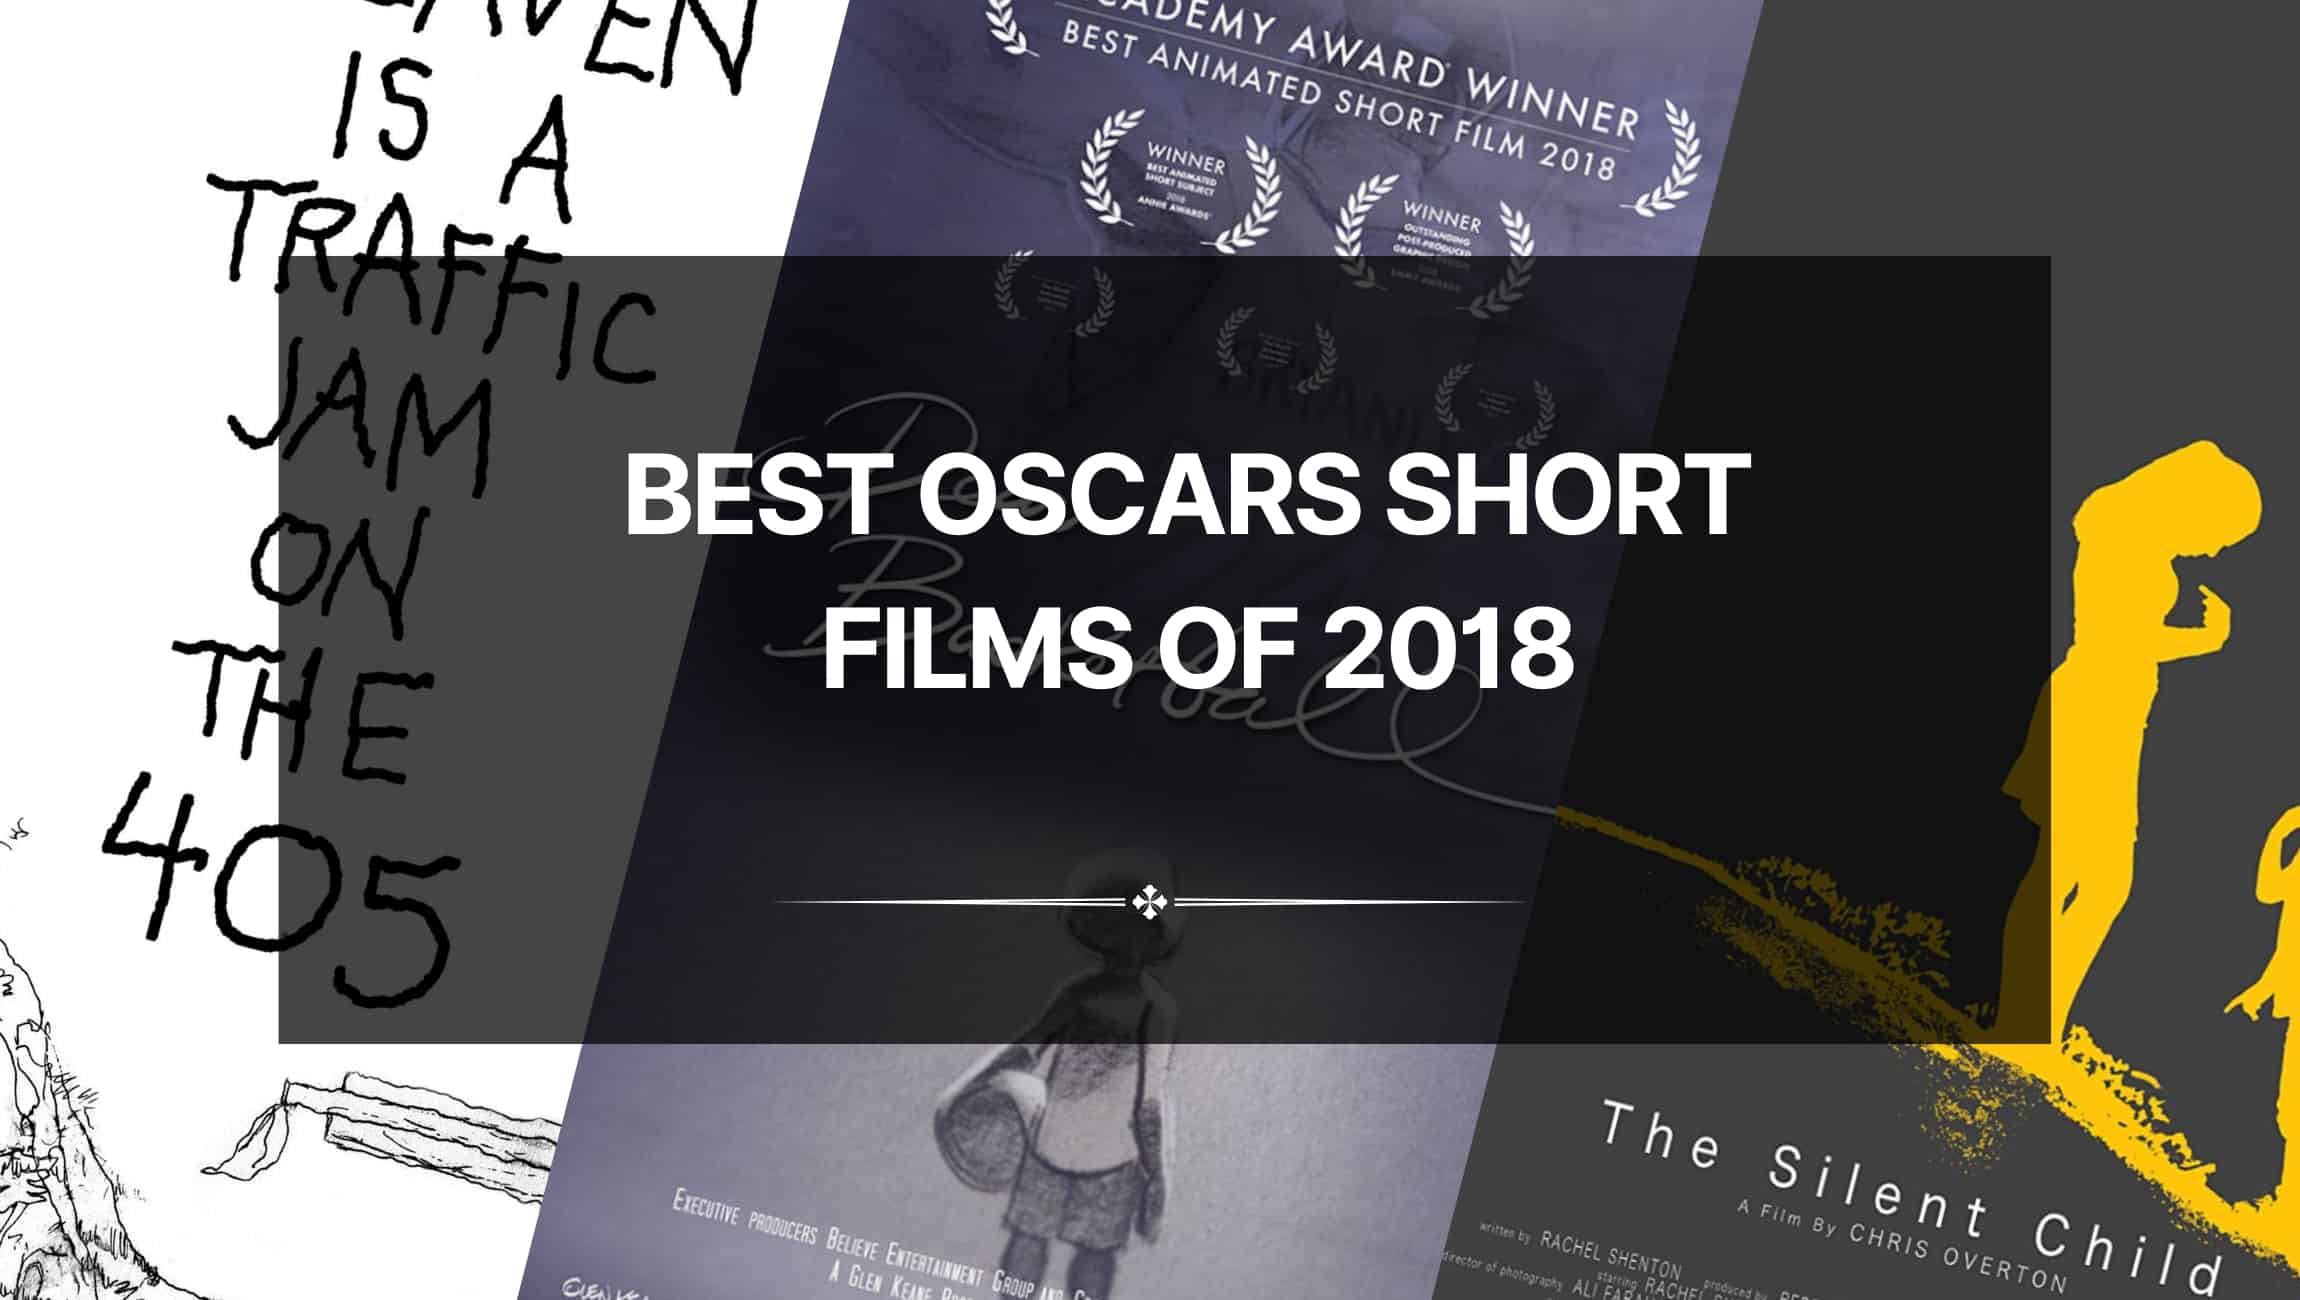 Best Oscars Short Films of 2018